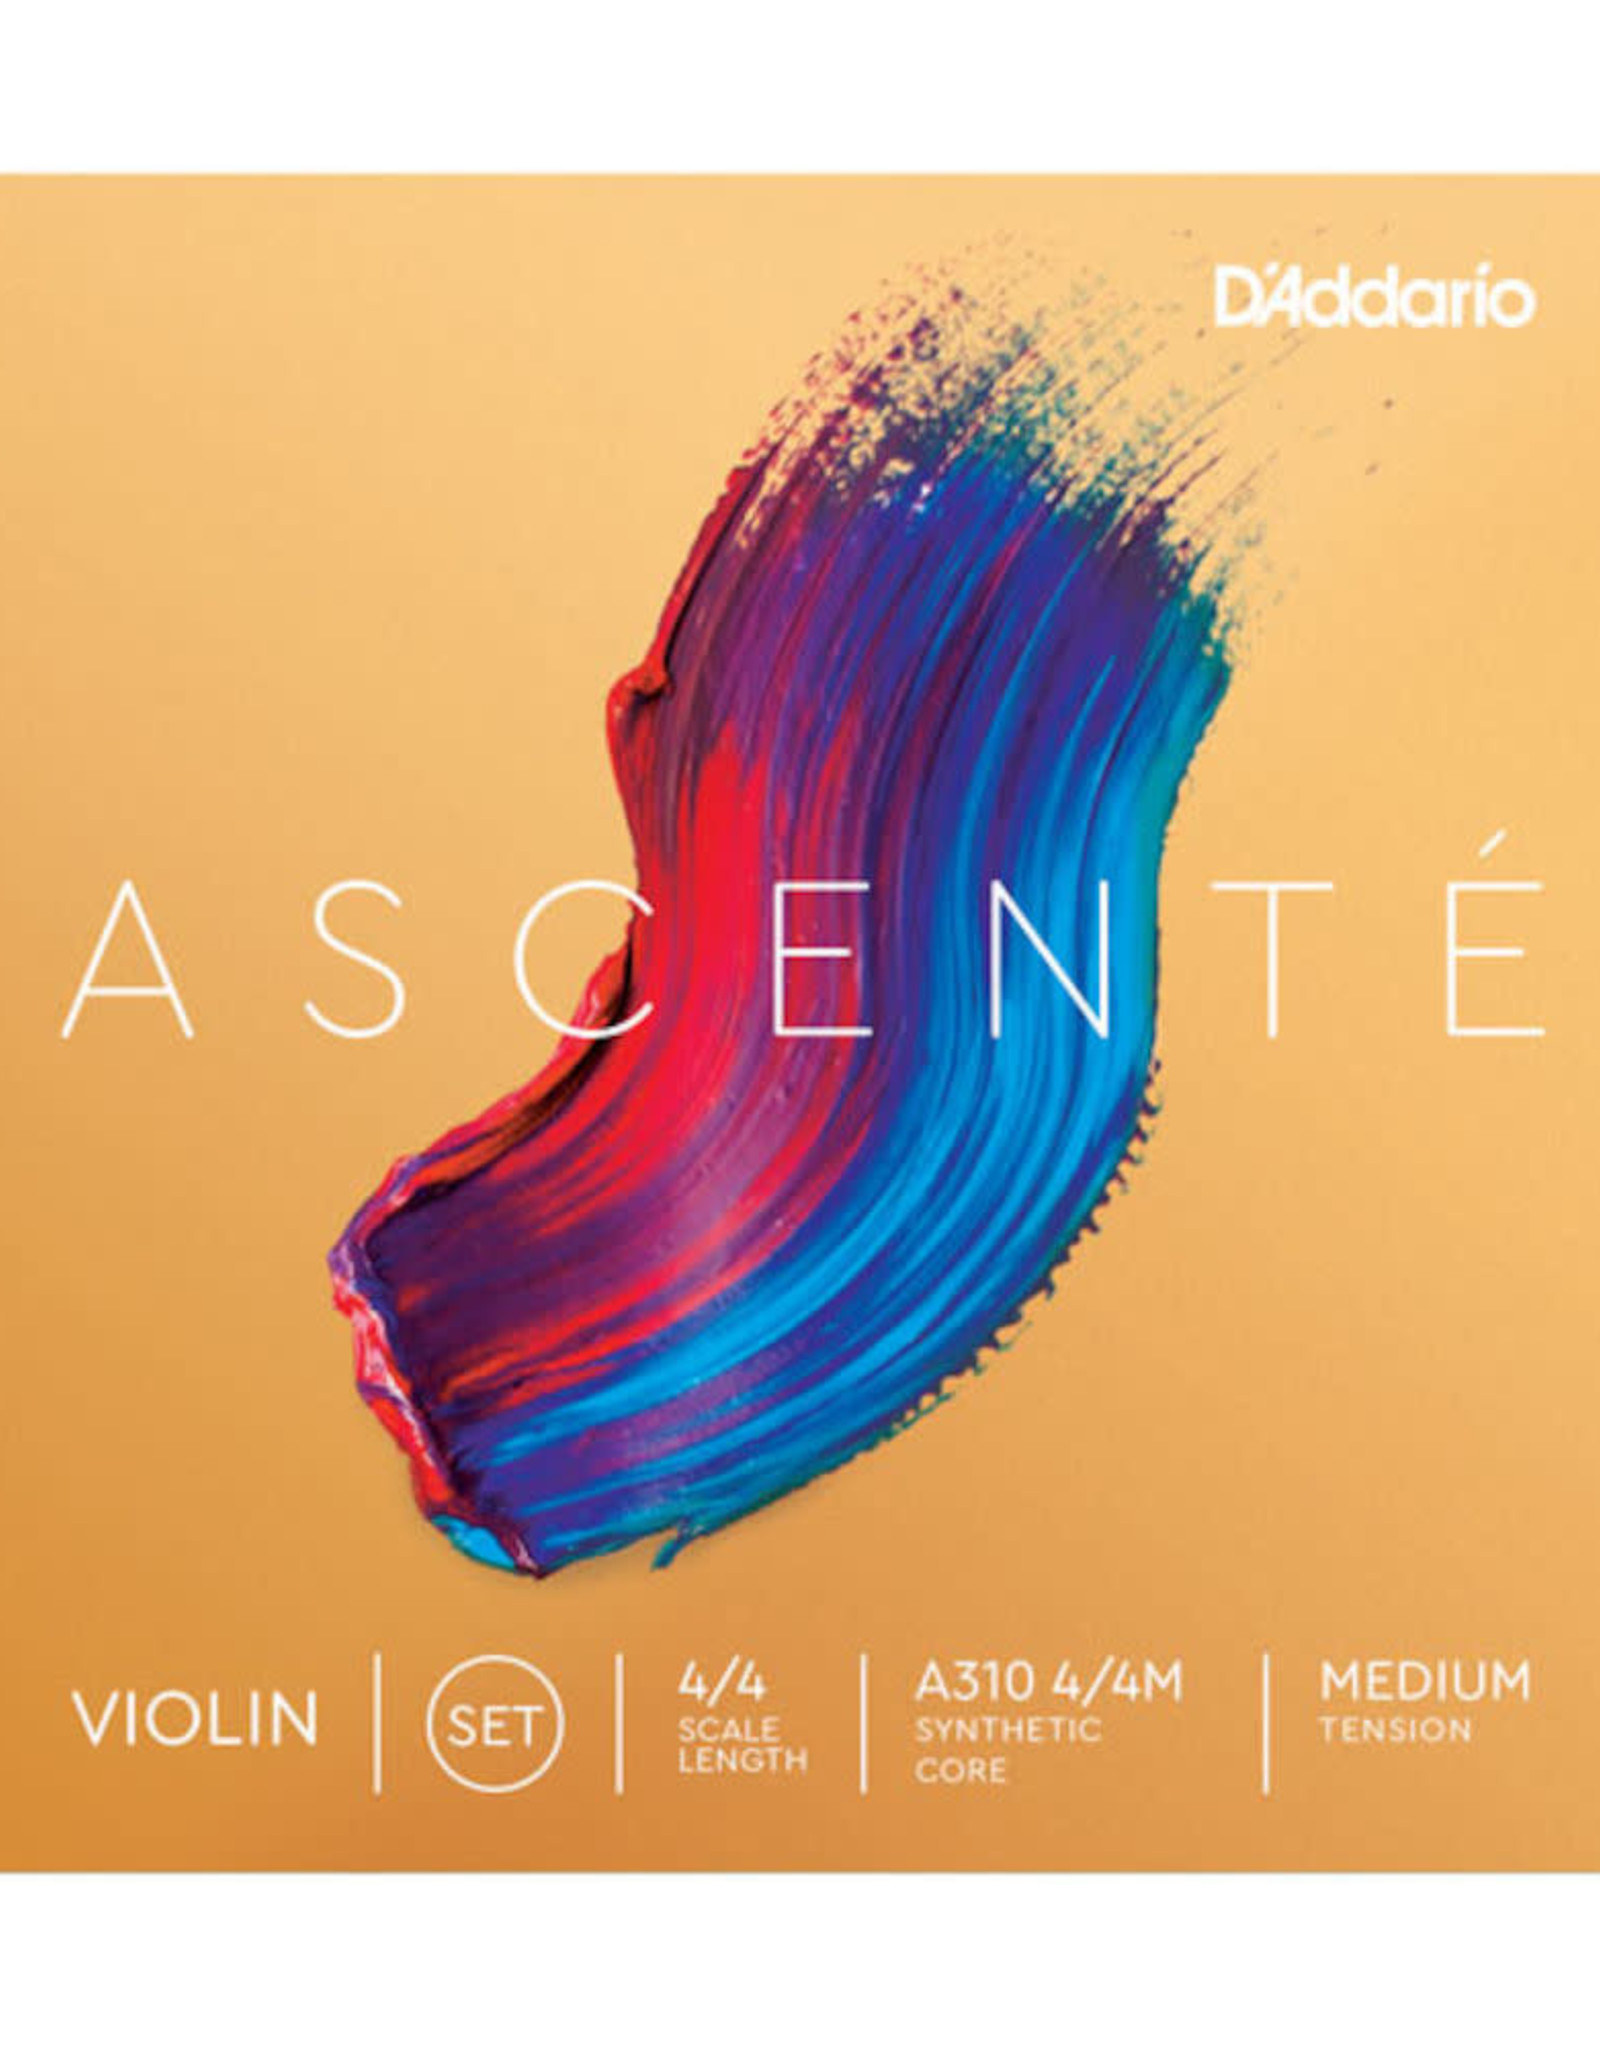 D'Addario D'Addario Ascenté Violin String Set, 4/4 Scale, Medium Tension